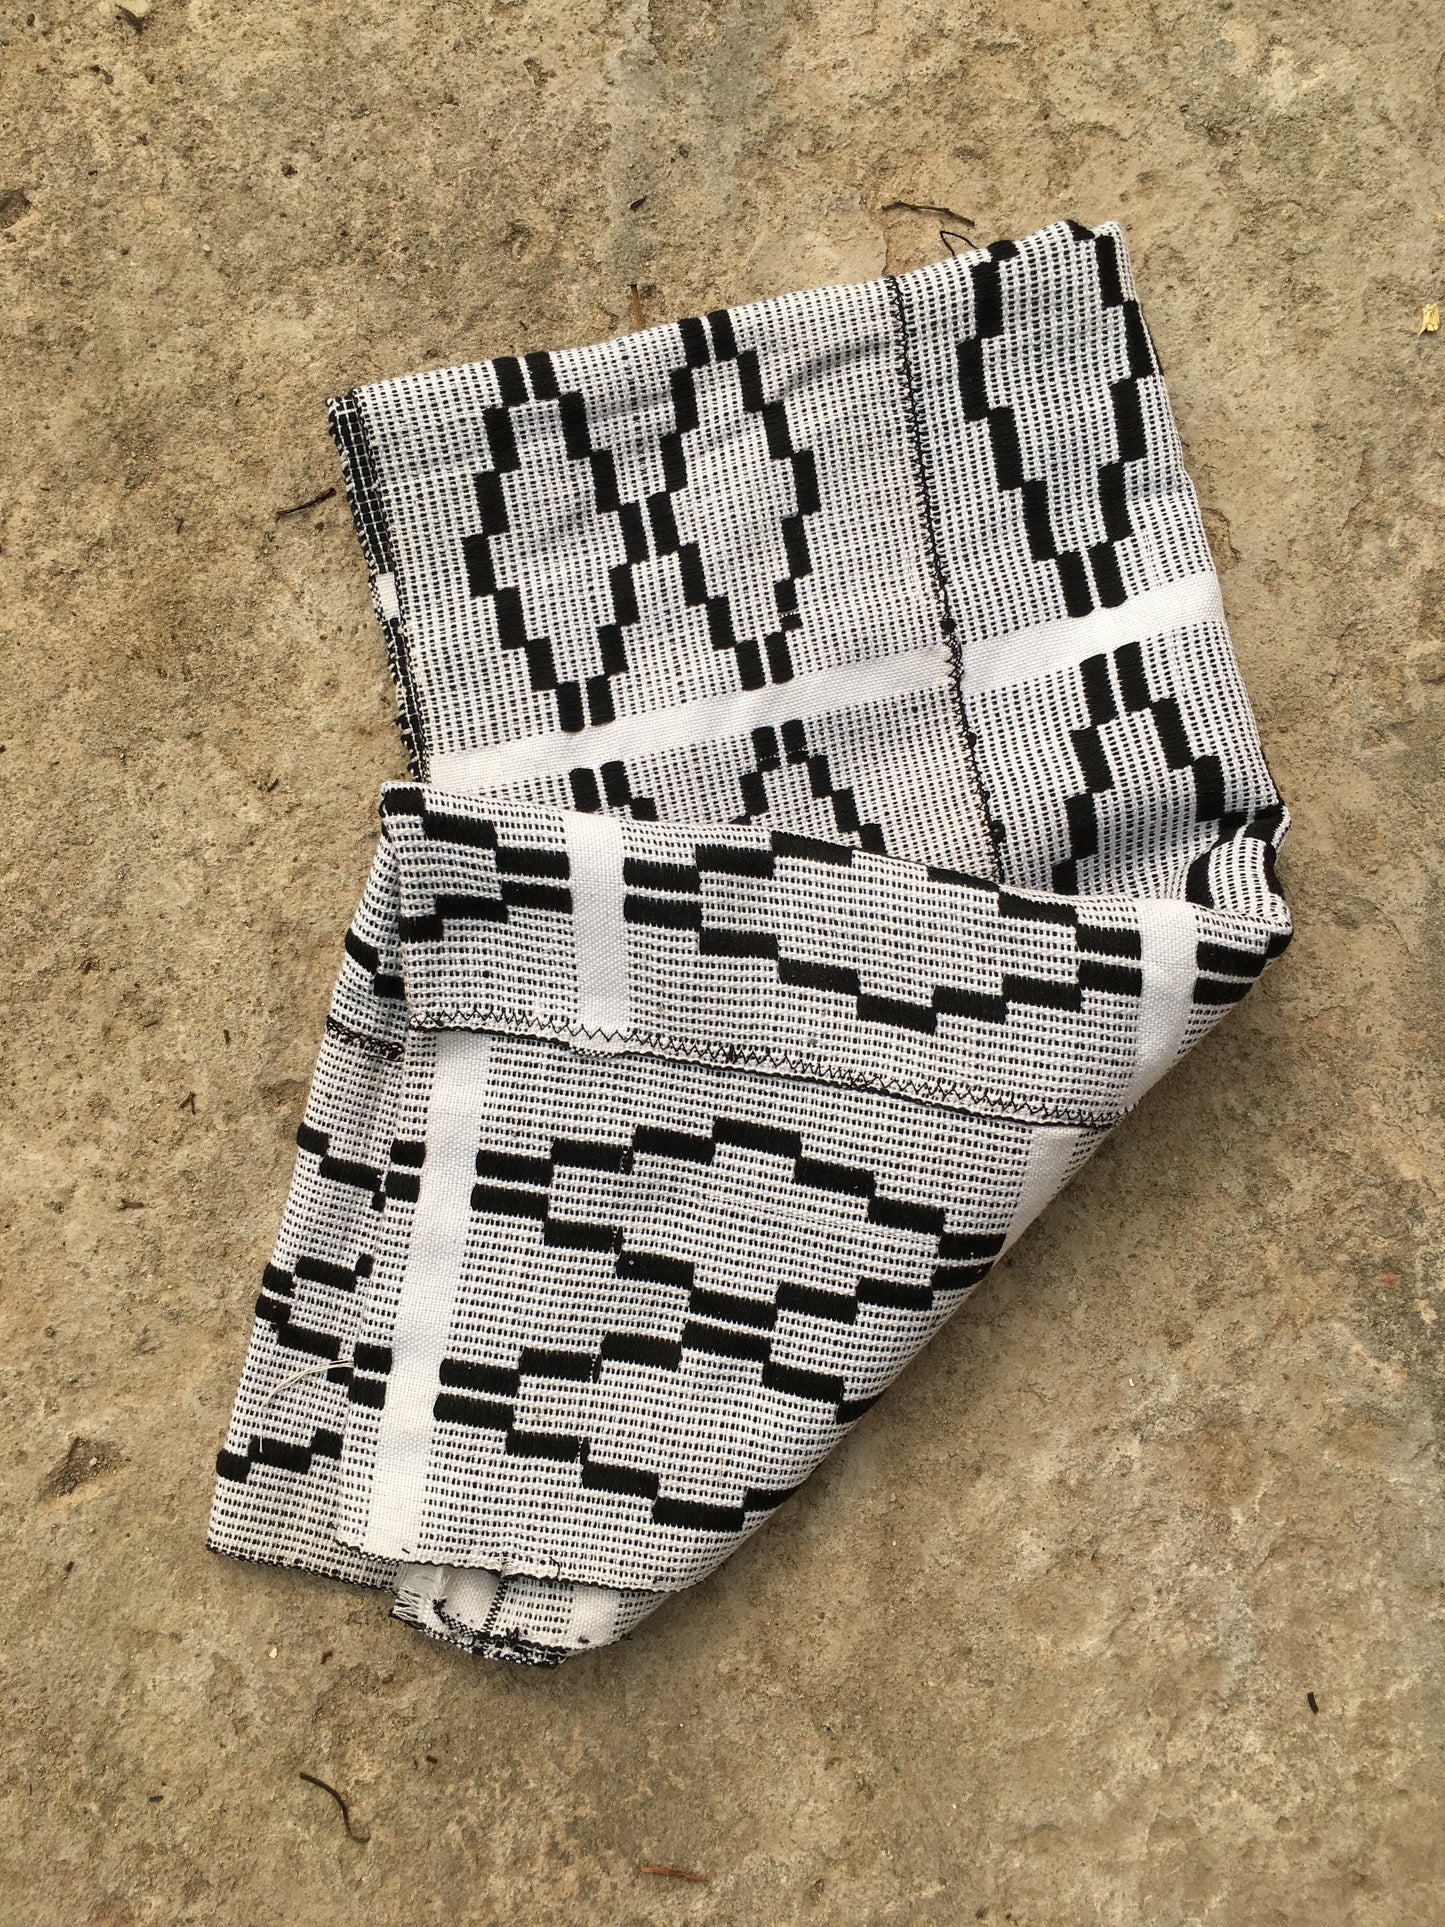 Ghana Kente cloth scarf / graphic weave